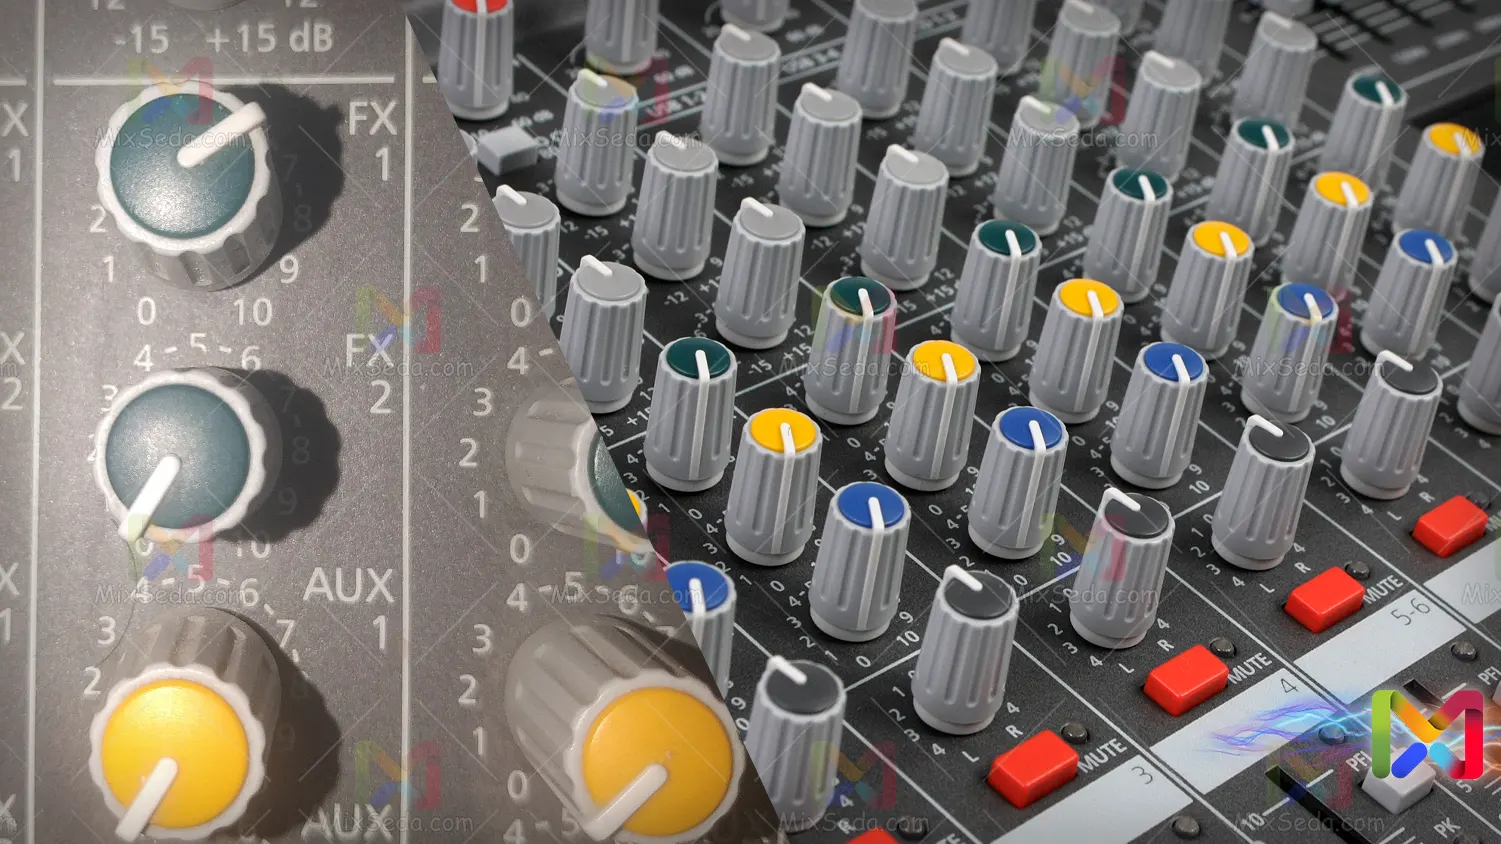 FX Volume in Dynacord mixer